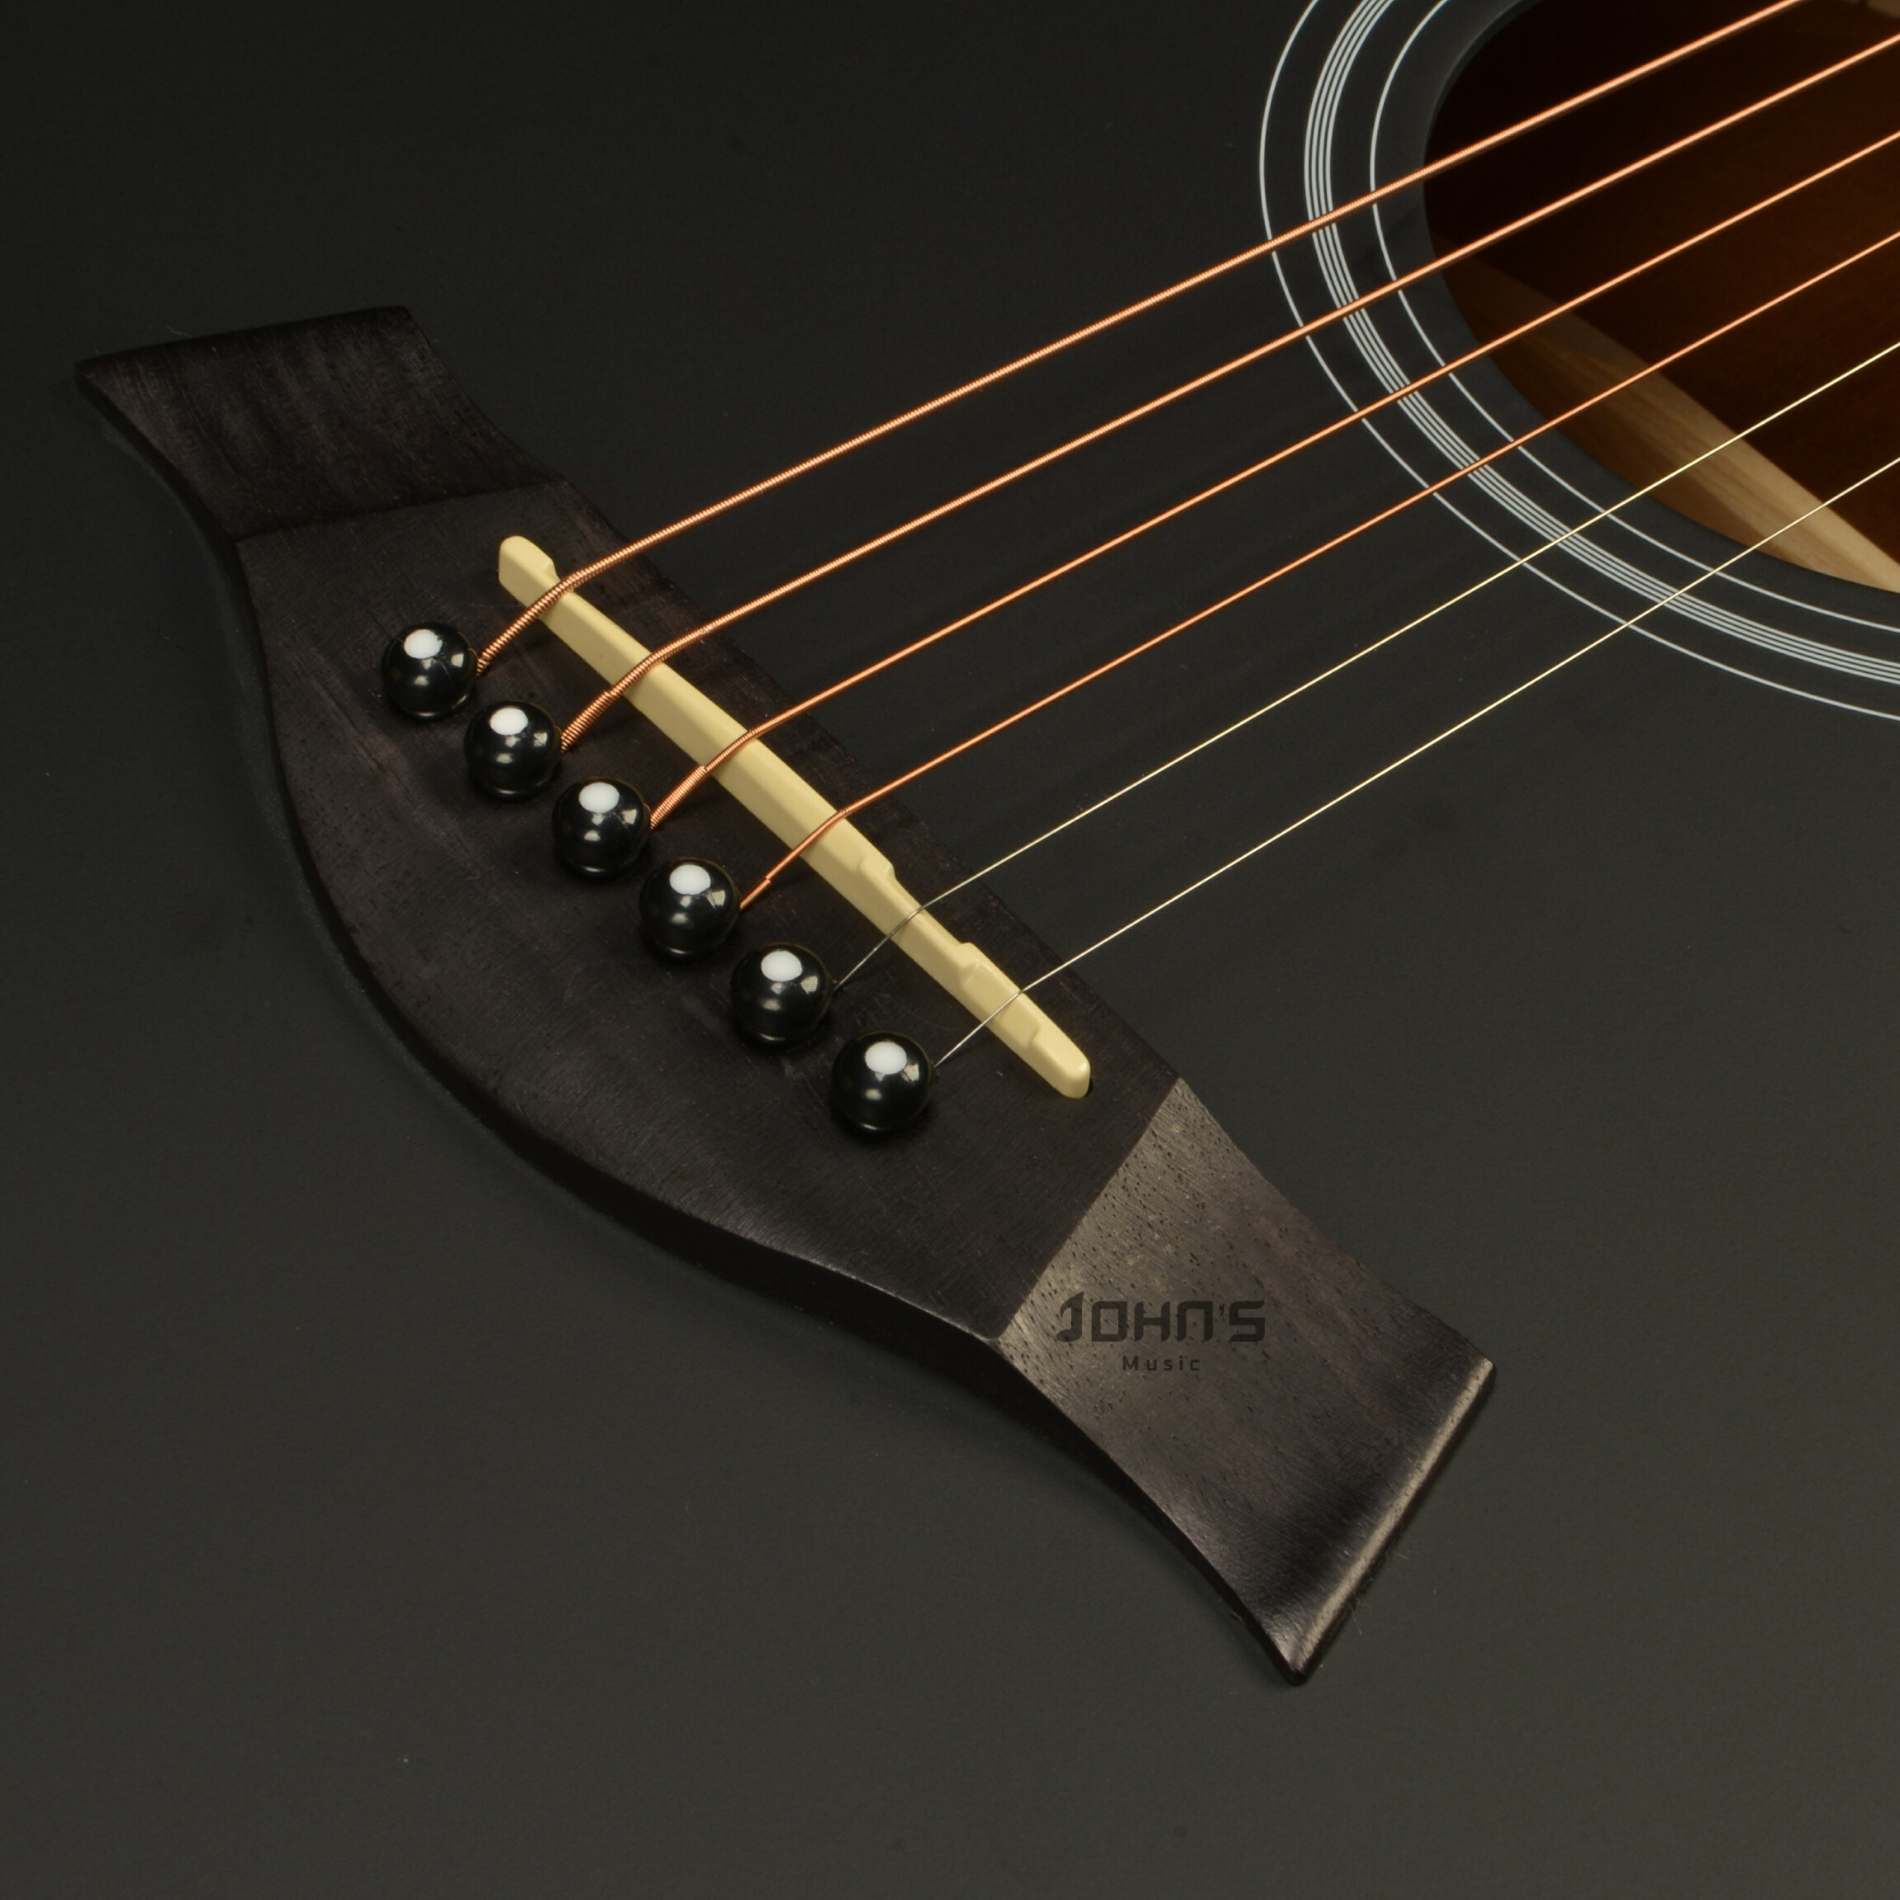 Kepma A1ce acoustic guitar matt black